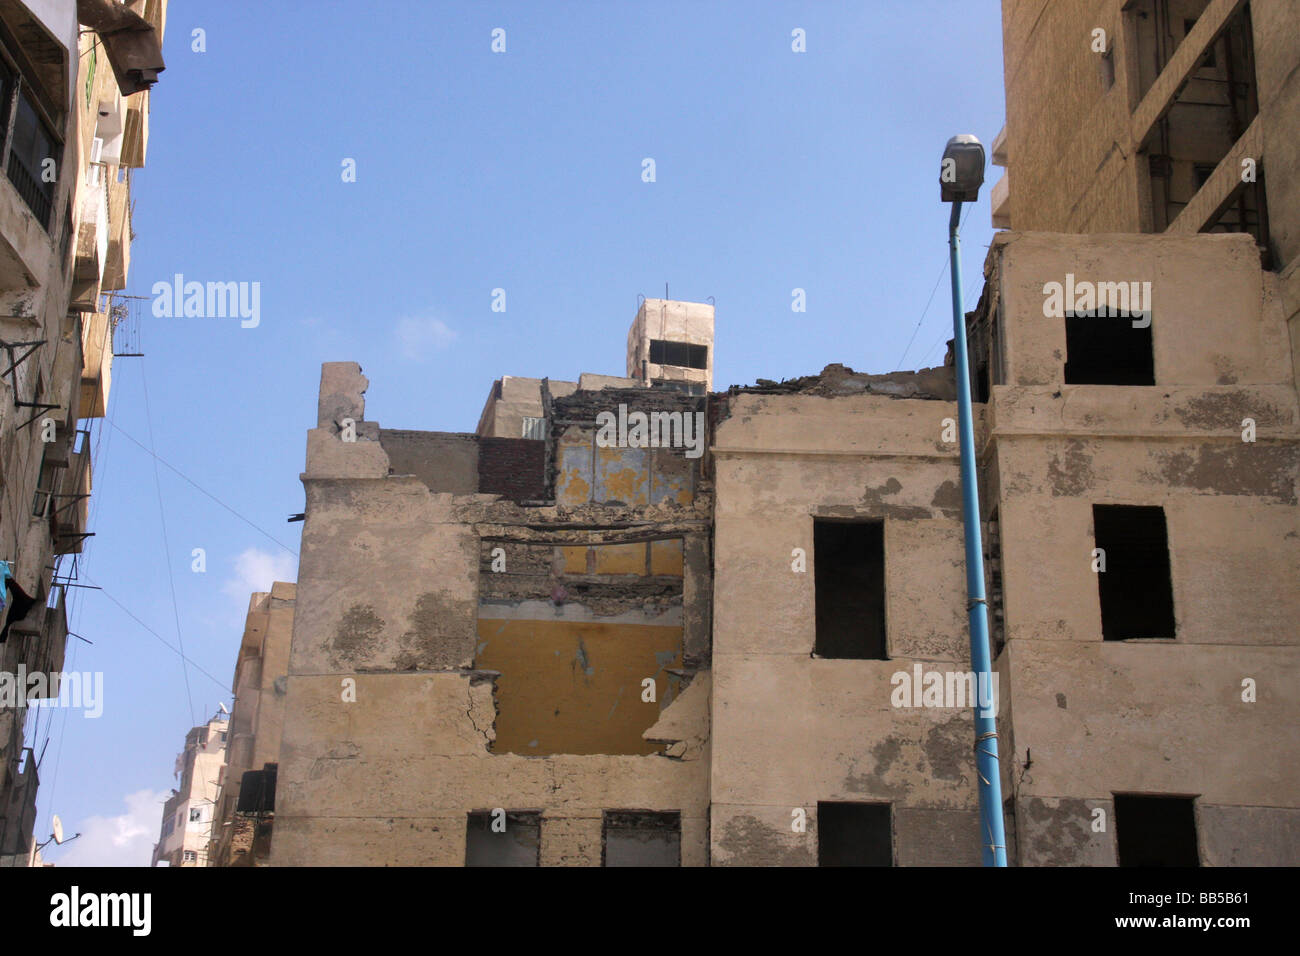 Streetscene, Alexandria, Egypt Stock Photo